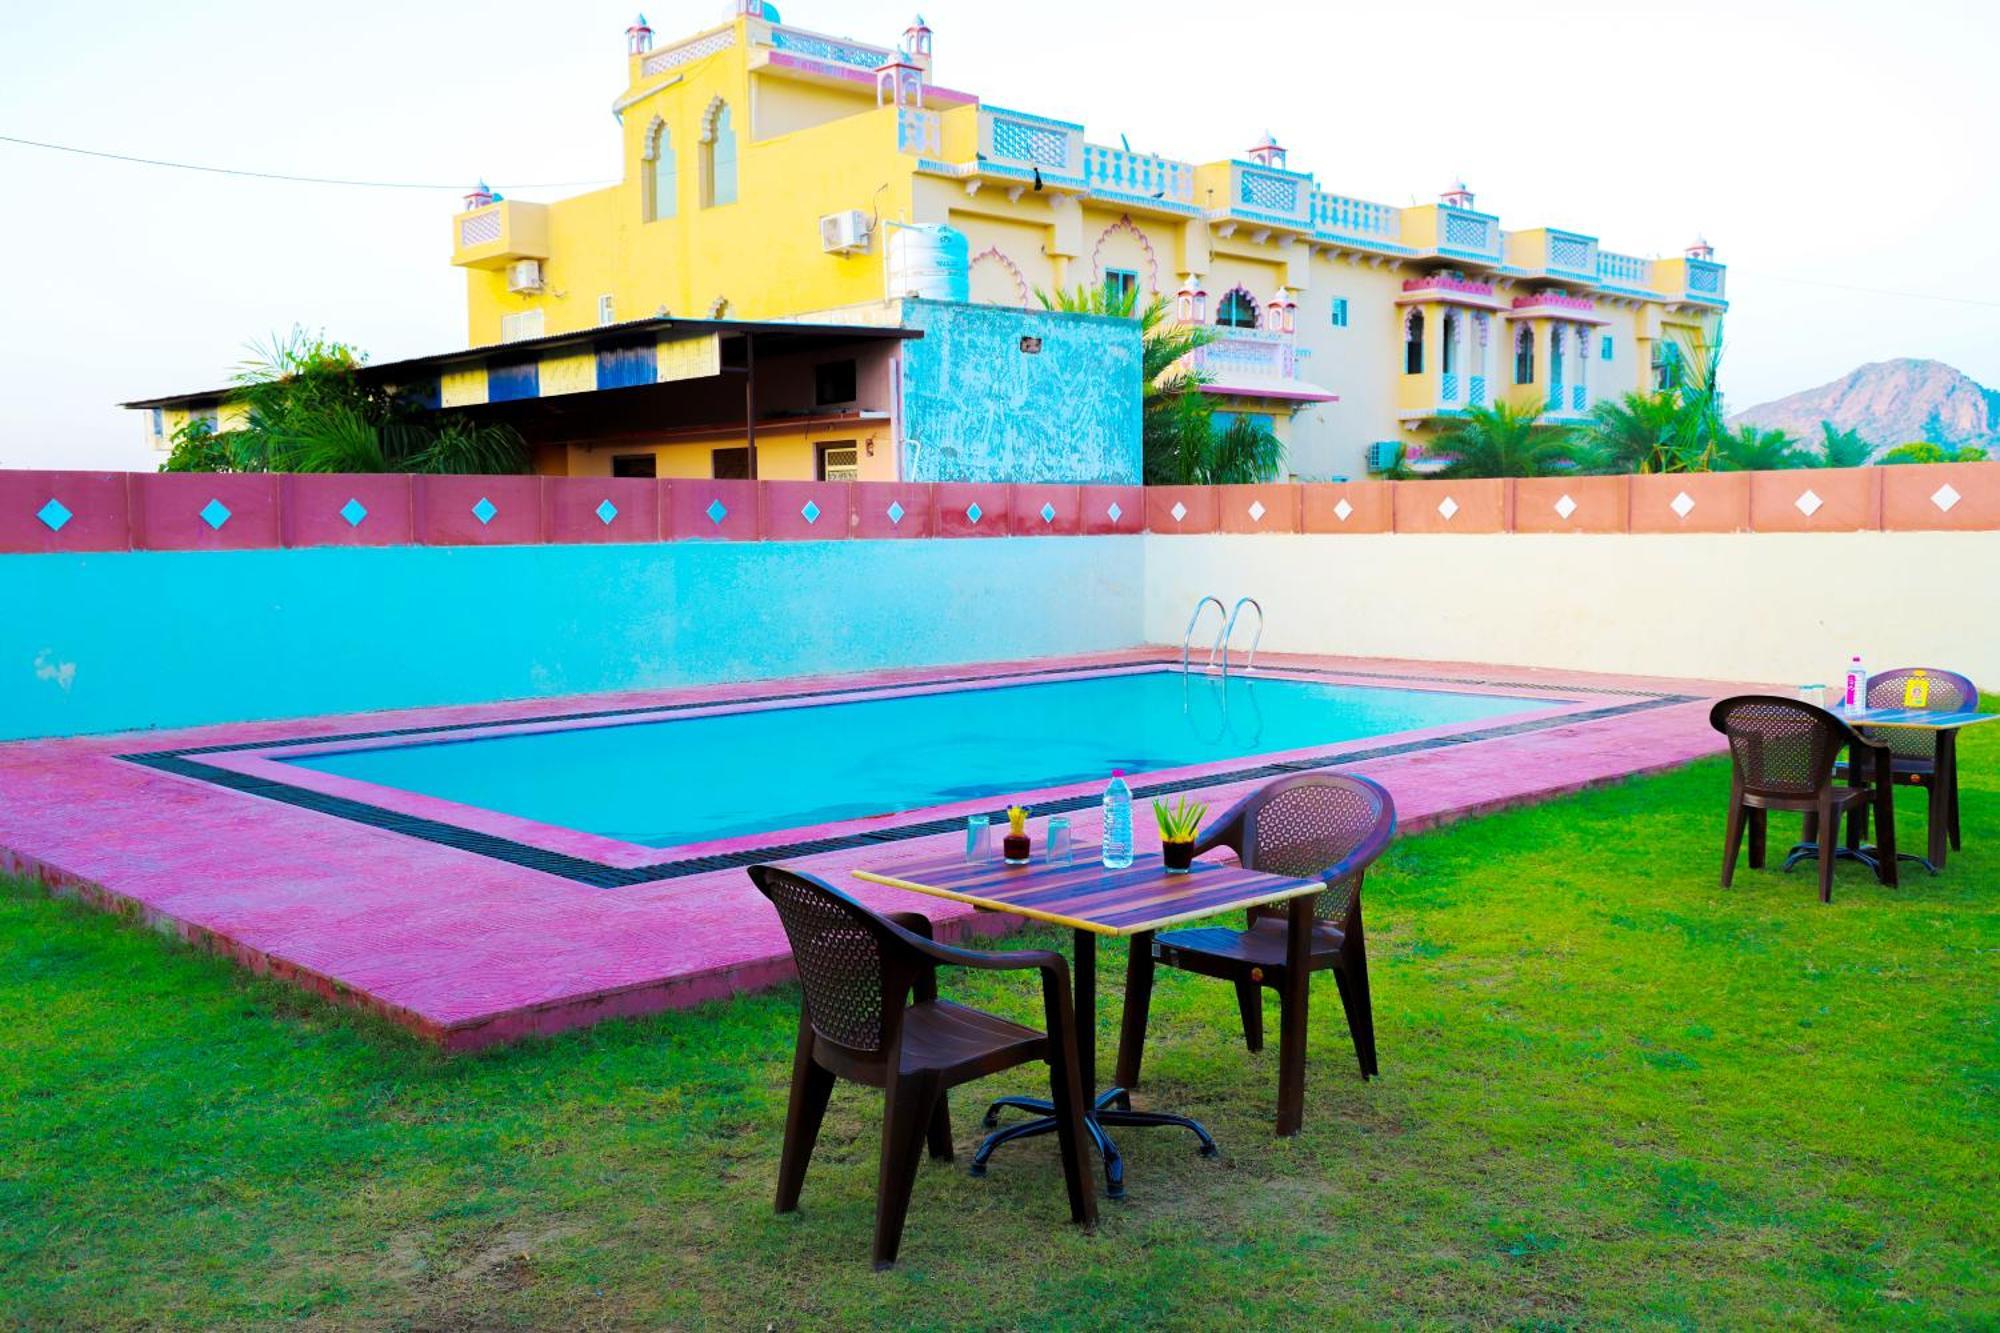 Hotel Mewad Haveli Pushkar Exterior photo